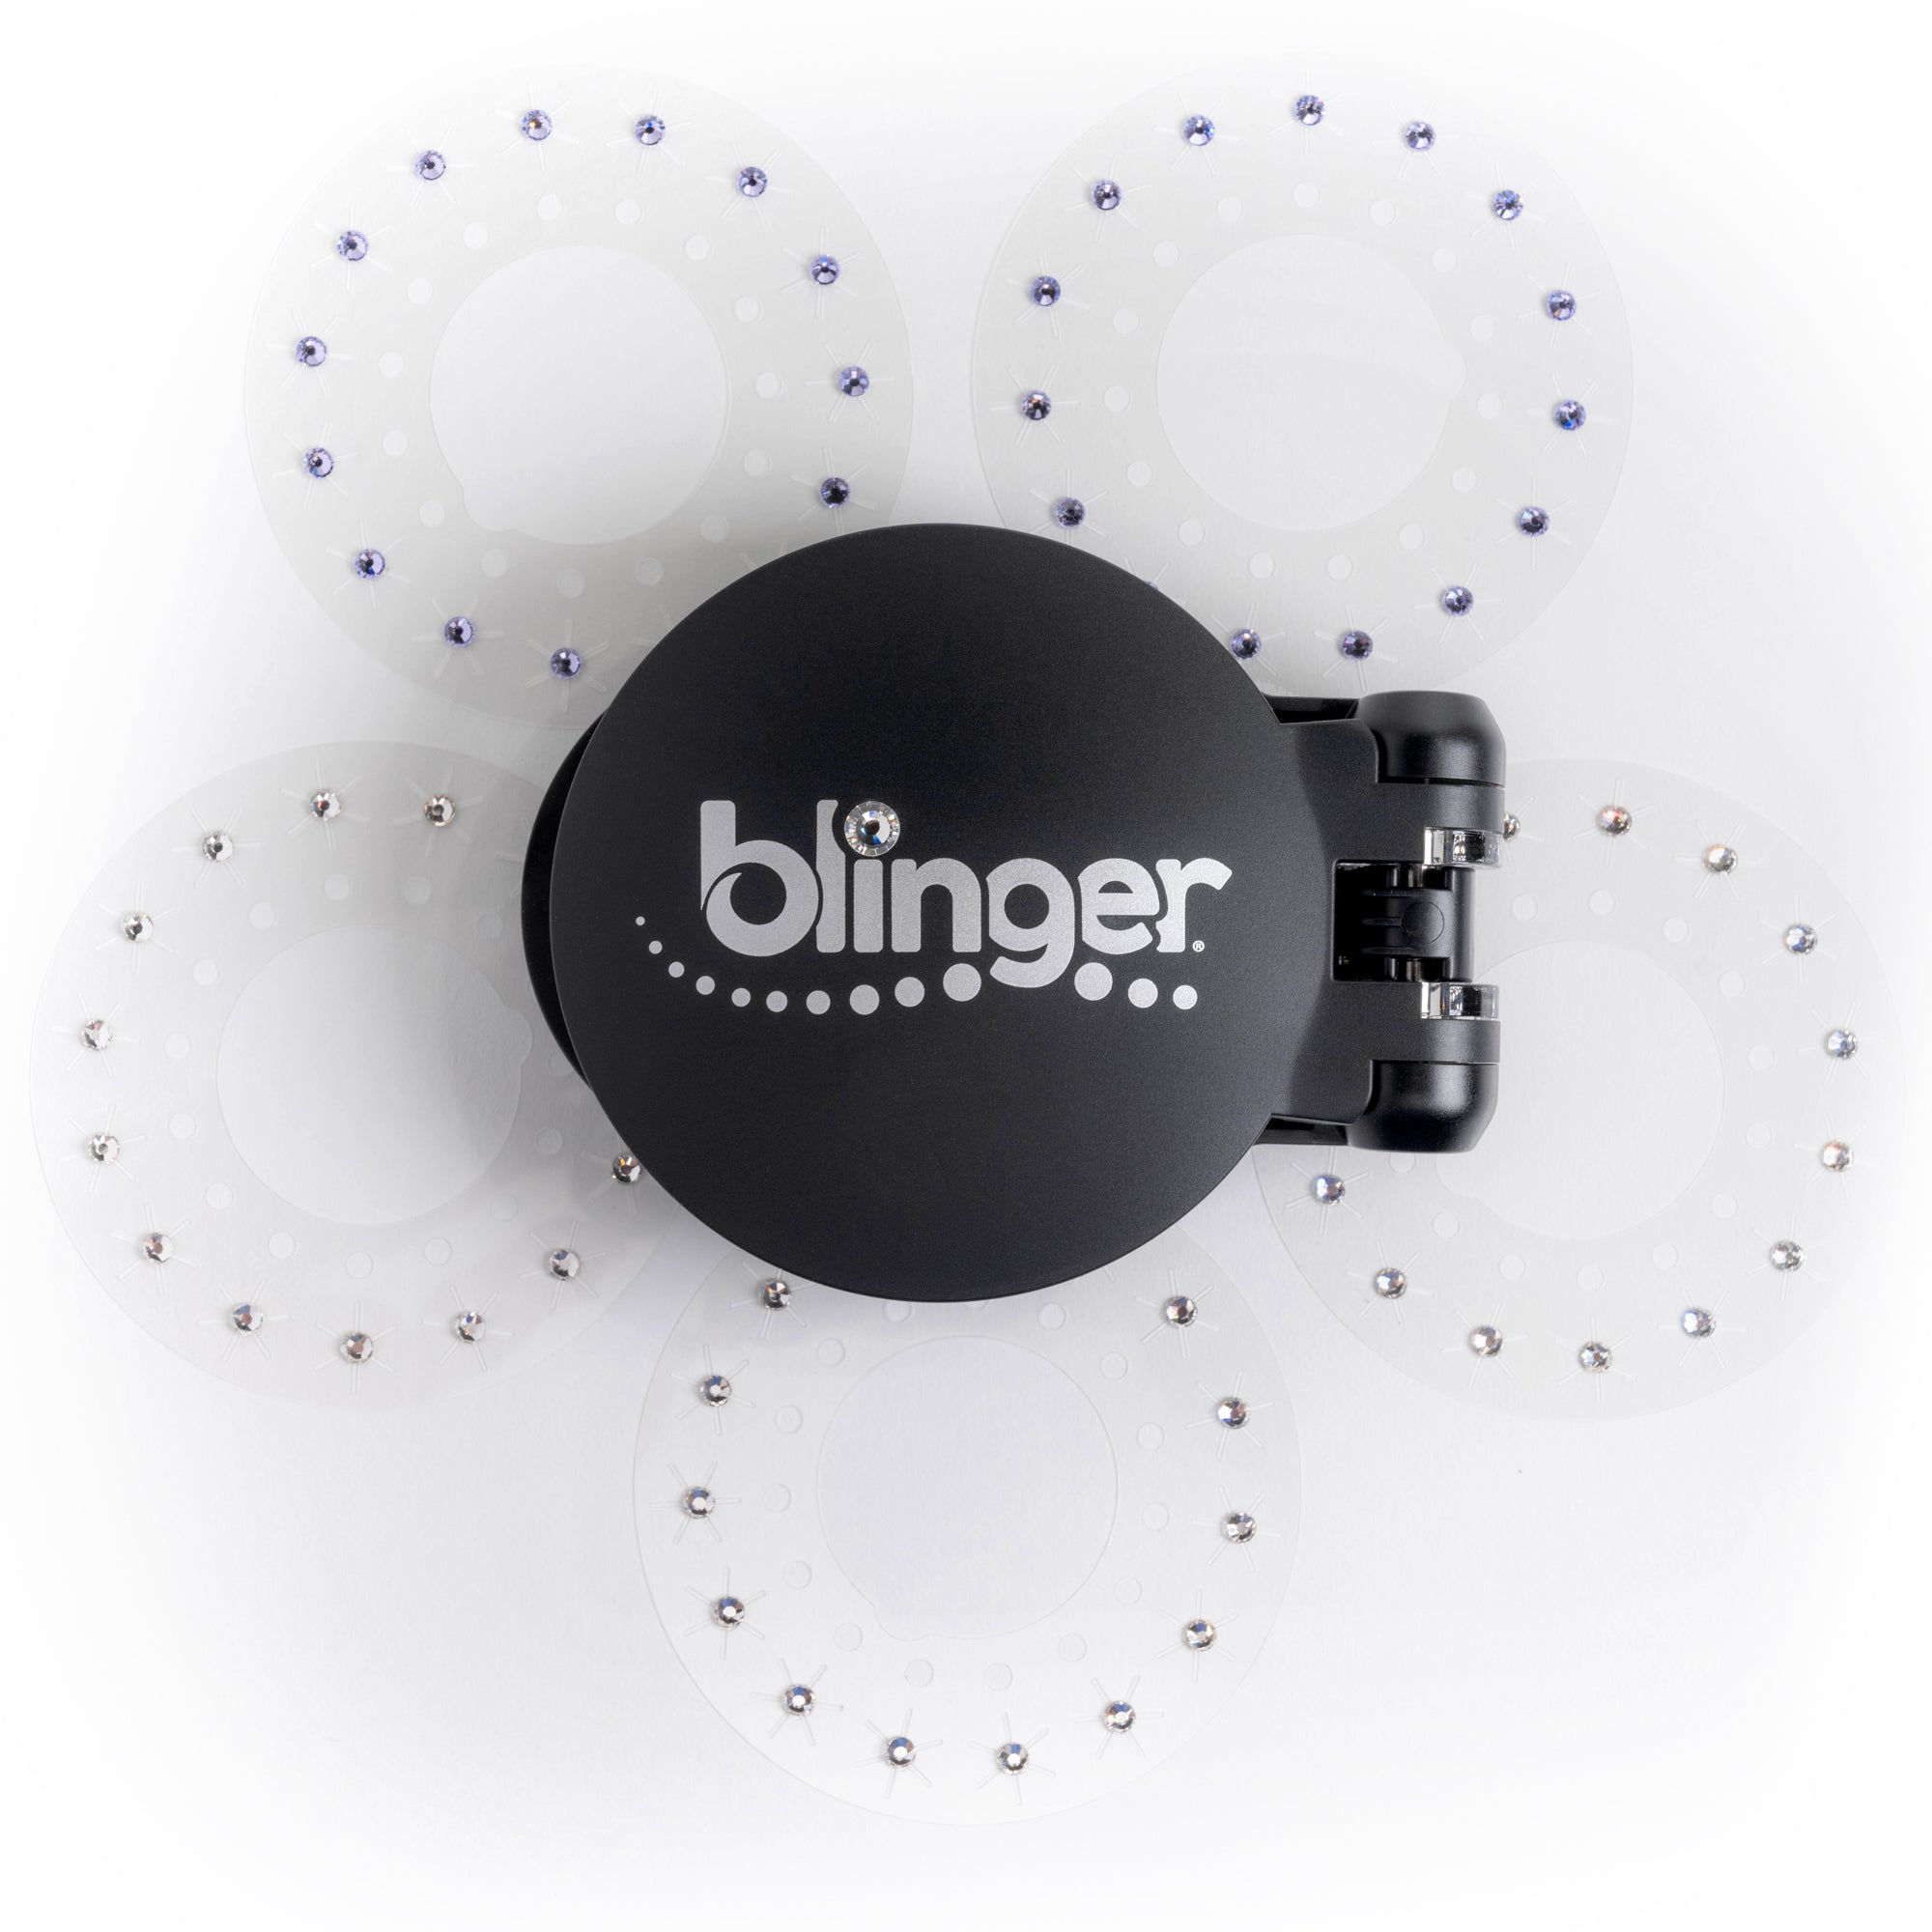 blinger® Starter Kit with blinger® Styling Tool + 75 Precision-Cut Glass Crystals